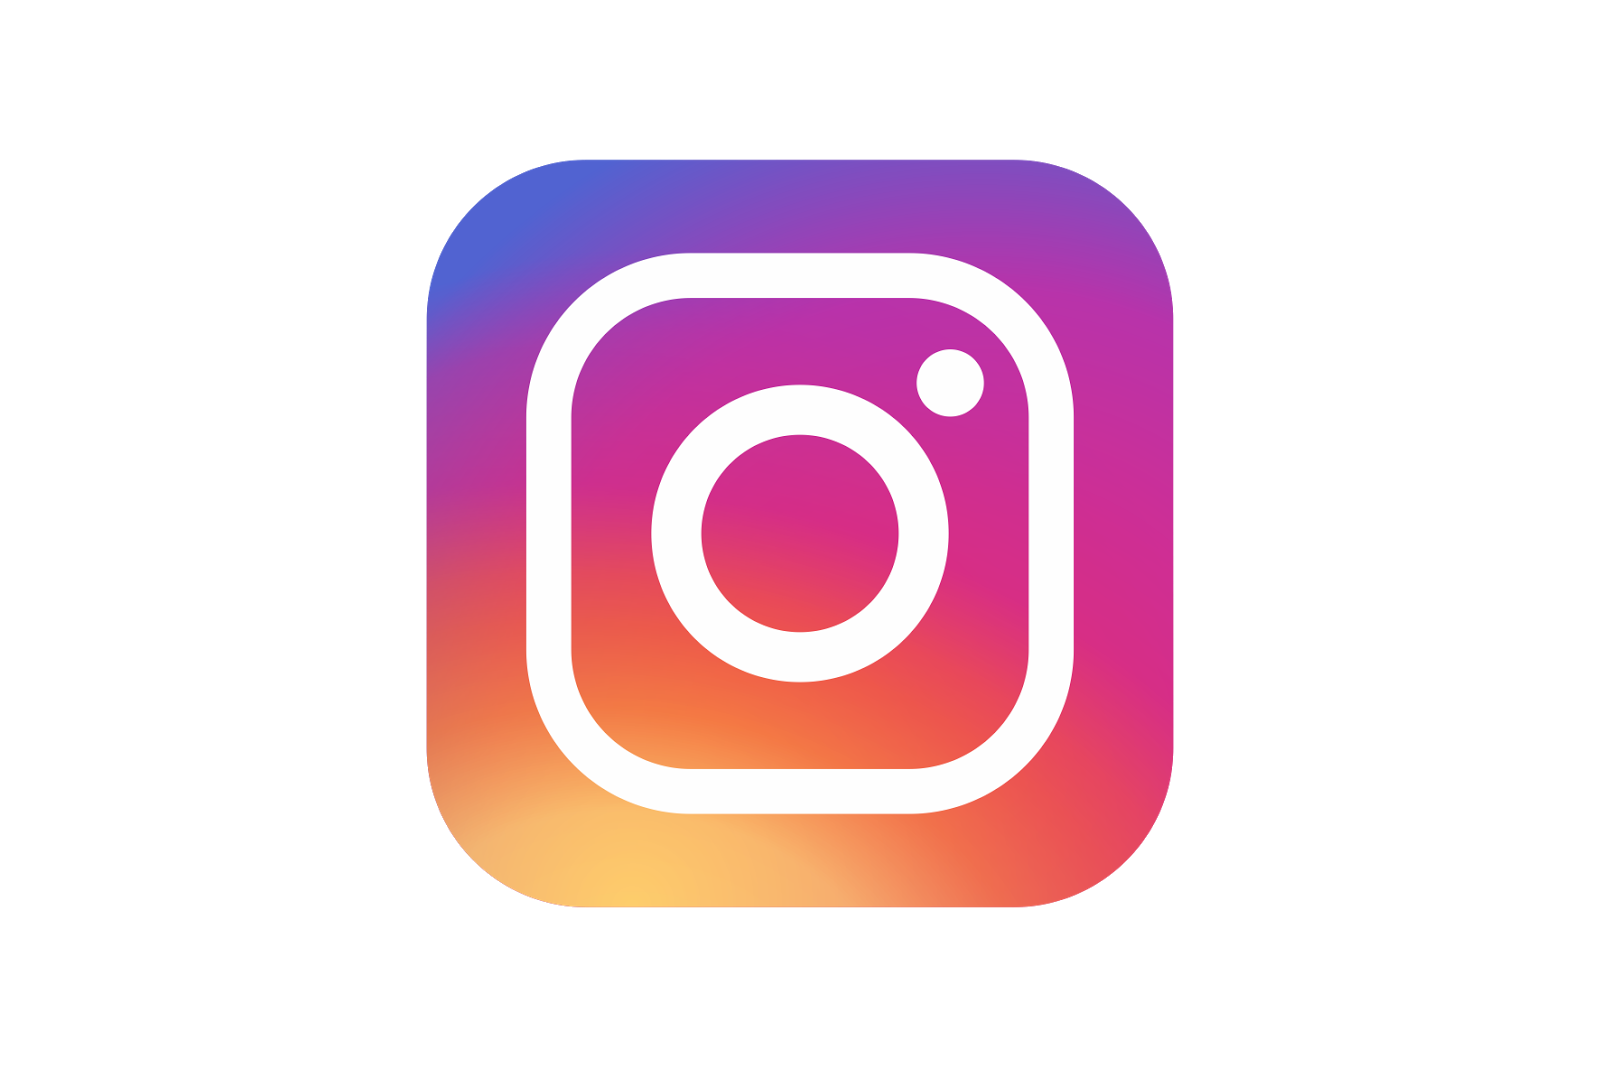 instagram clipart instagram camera